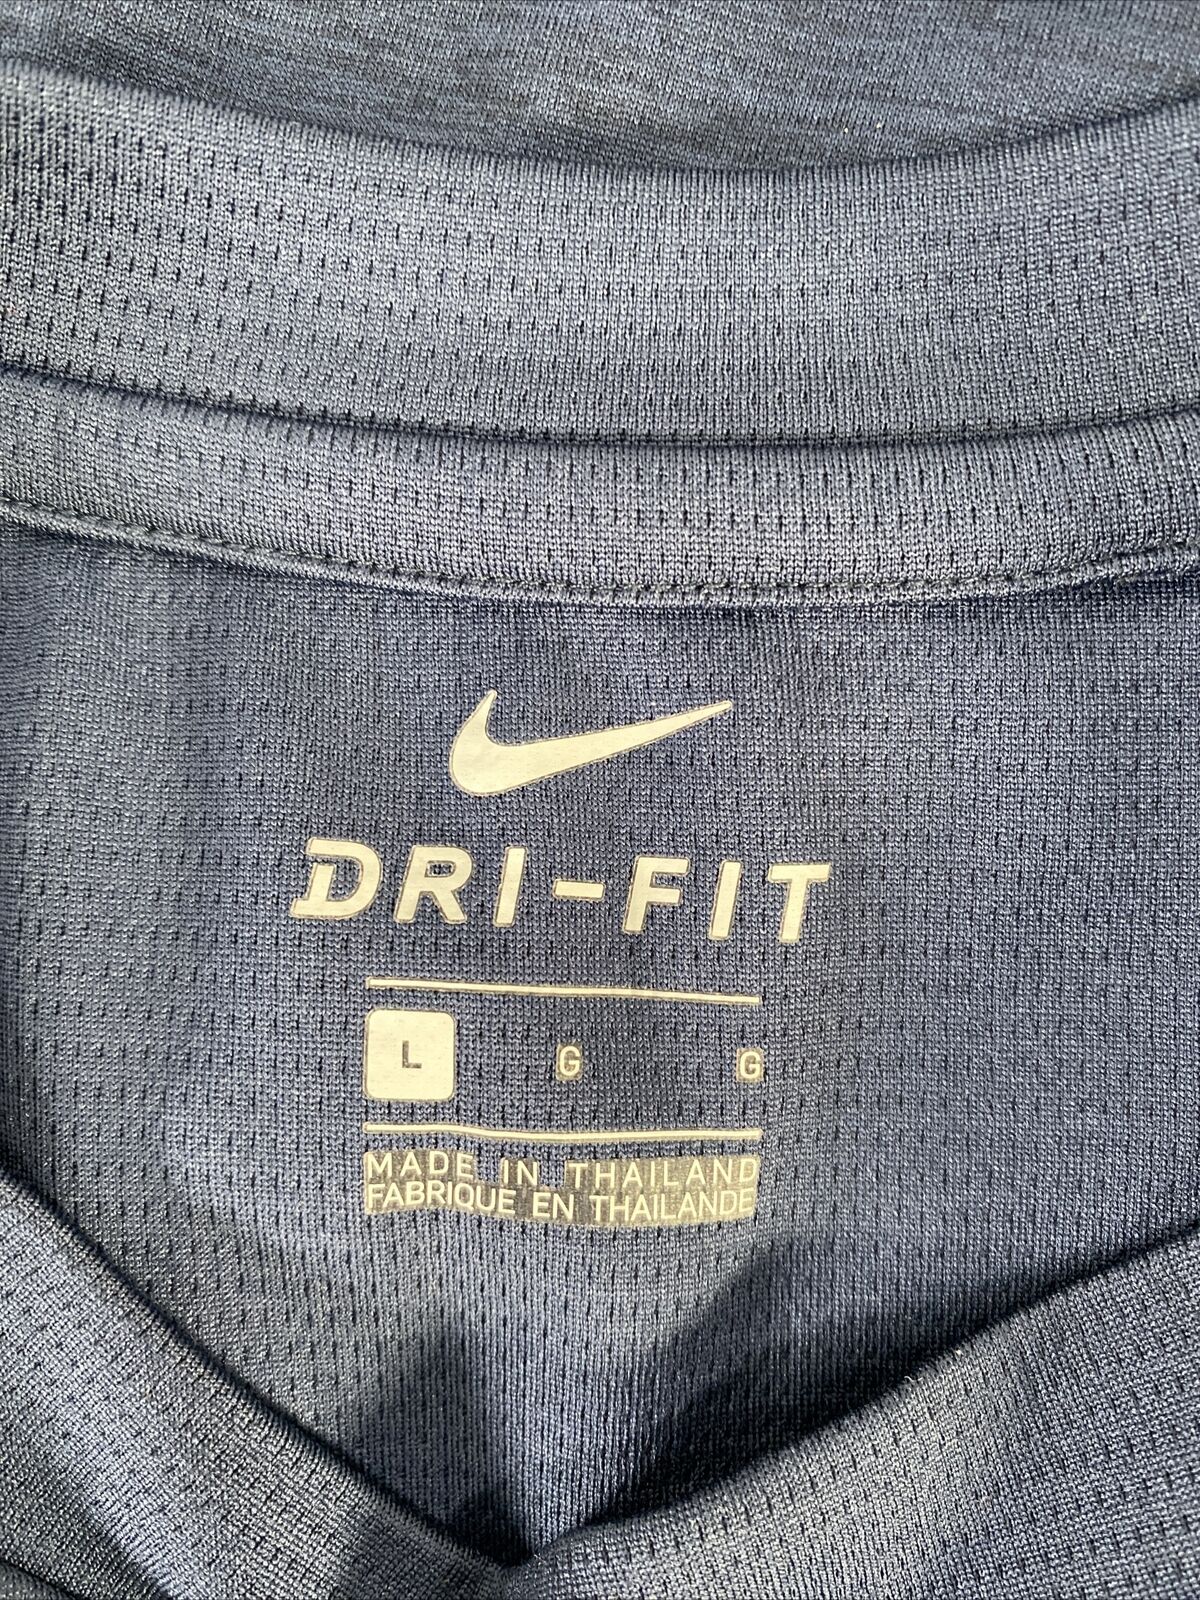 Nike Men's Blue Short Sleeve Fighting Illini Athletic T-Shirt - L